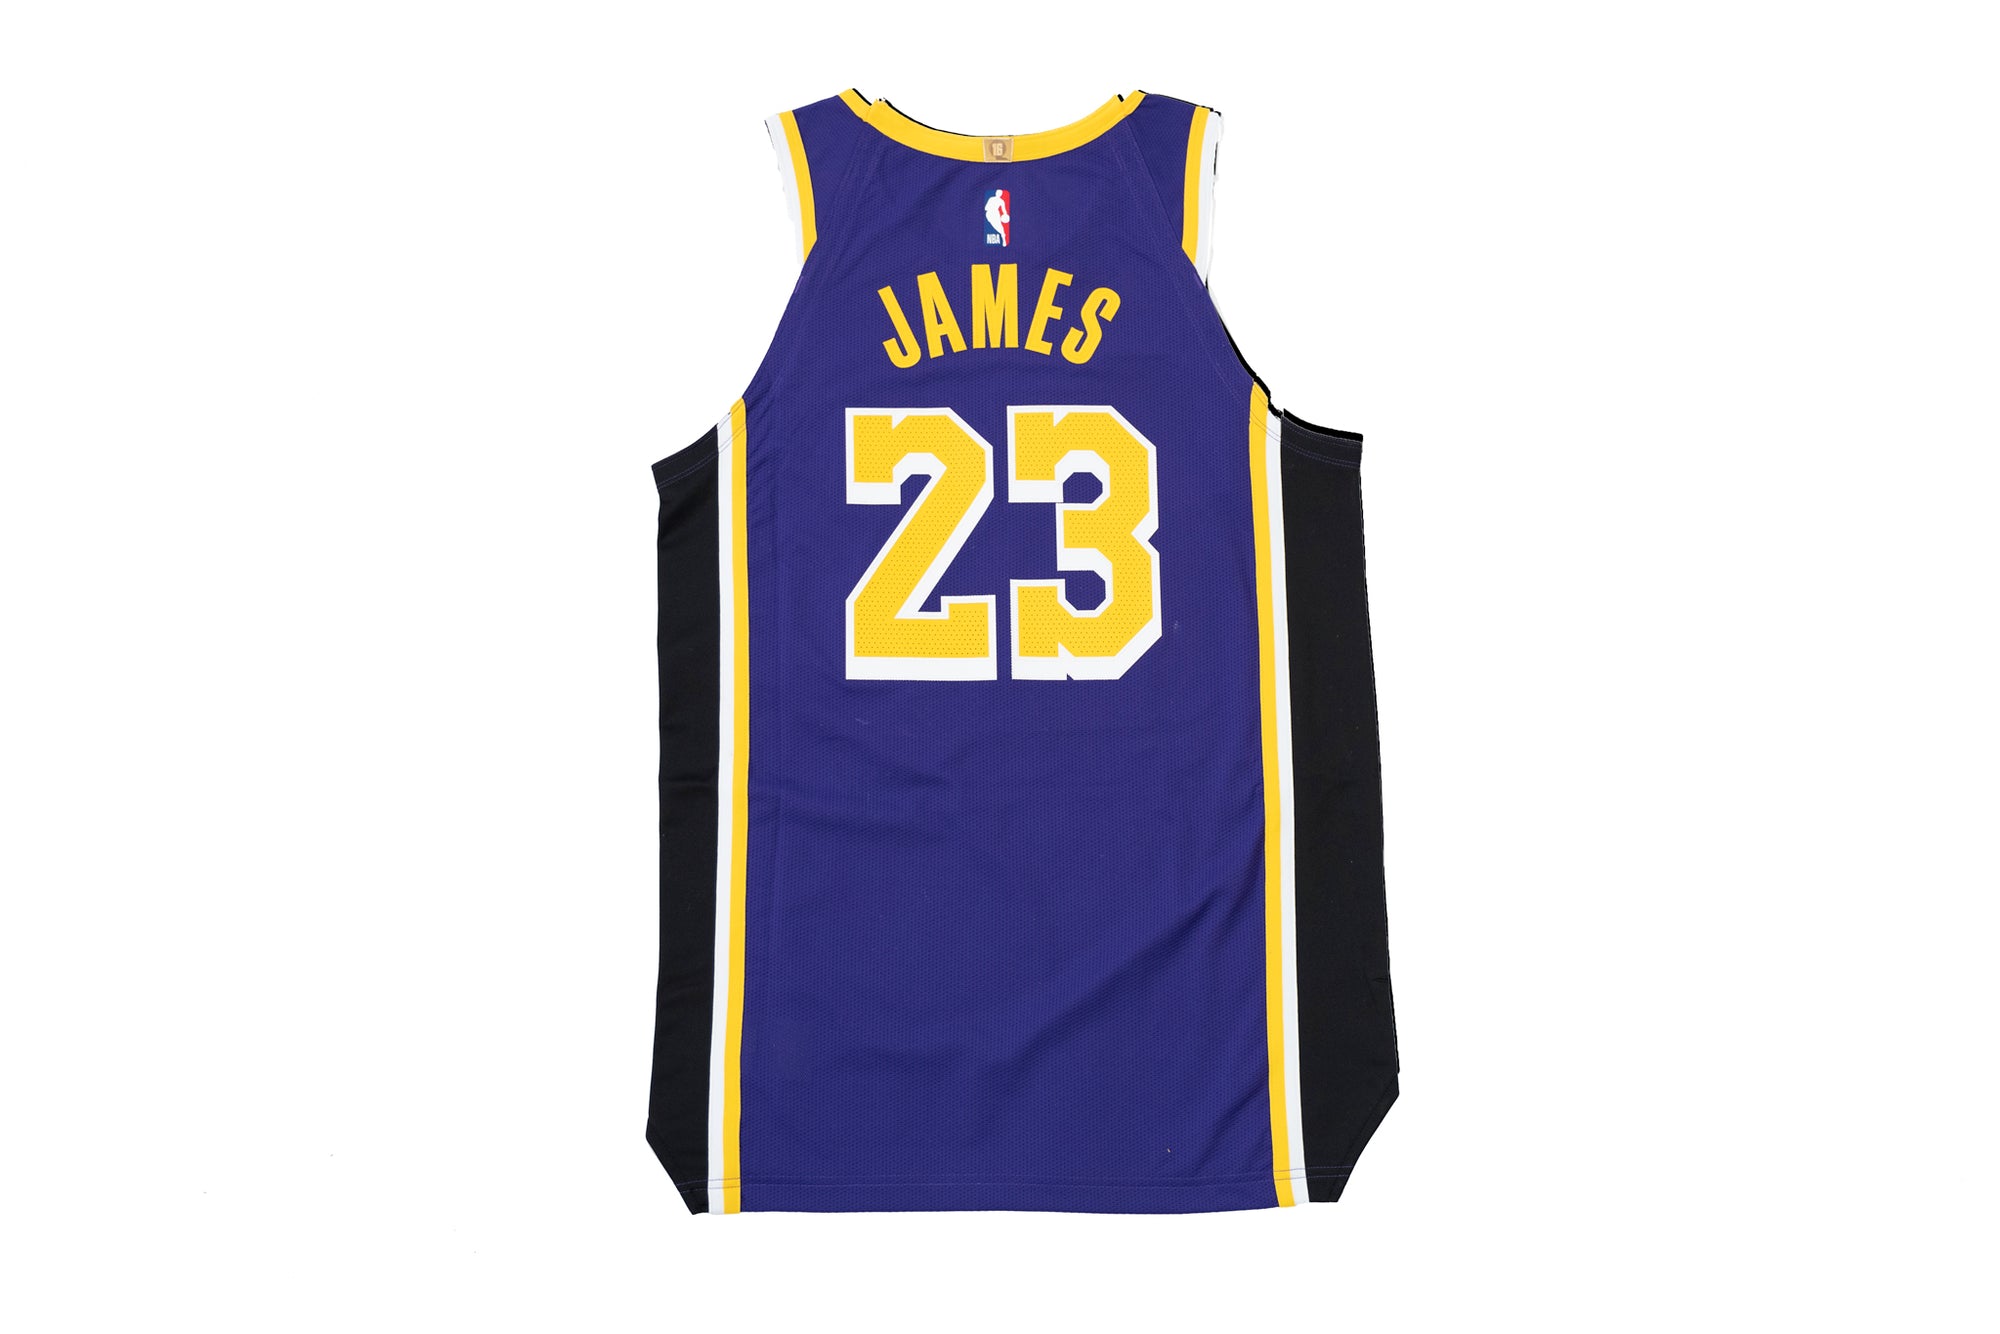 LeBron James Signed LA Lakers Jersey